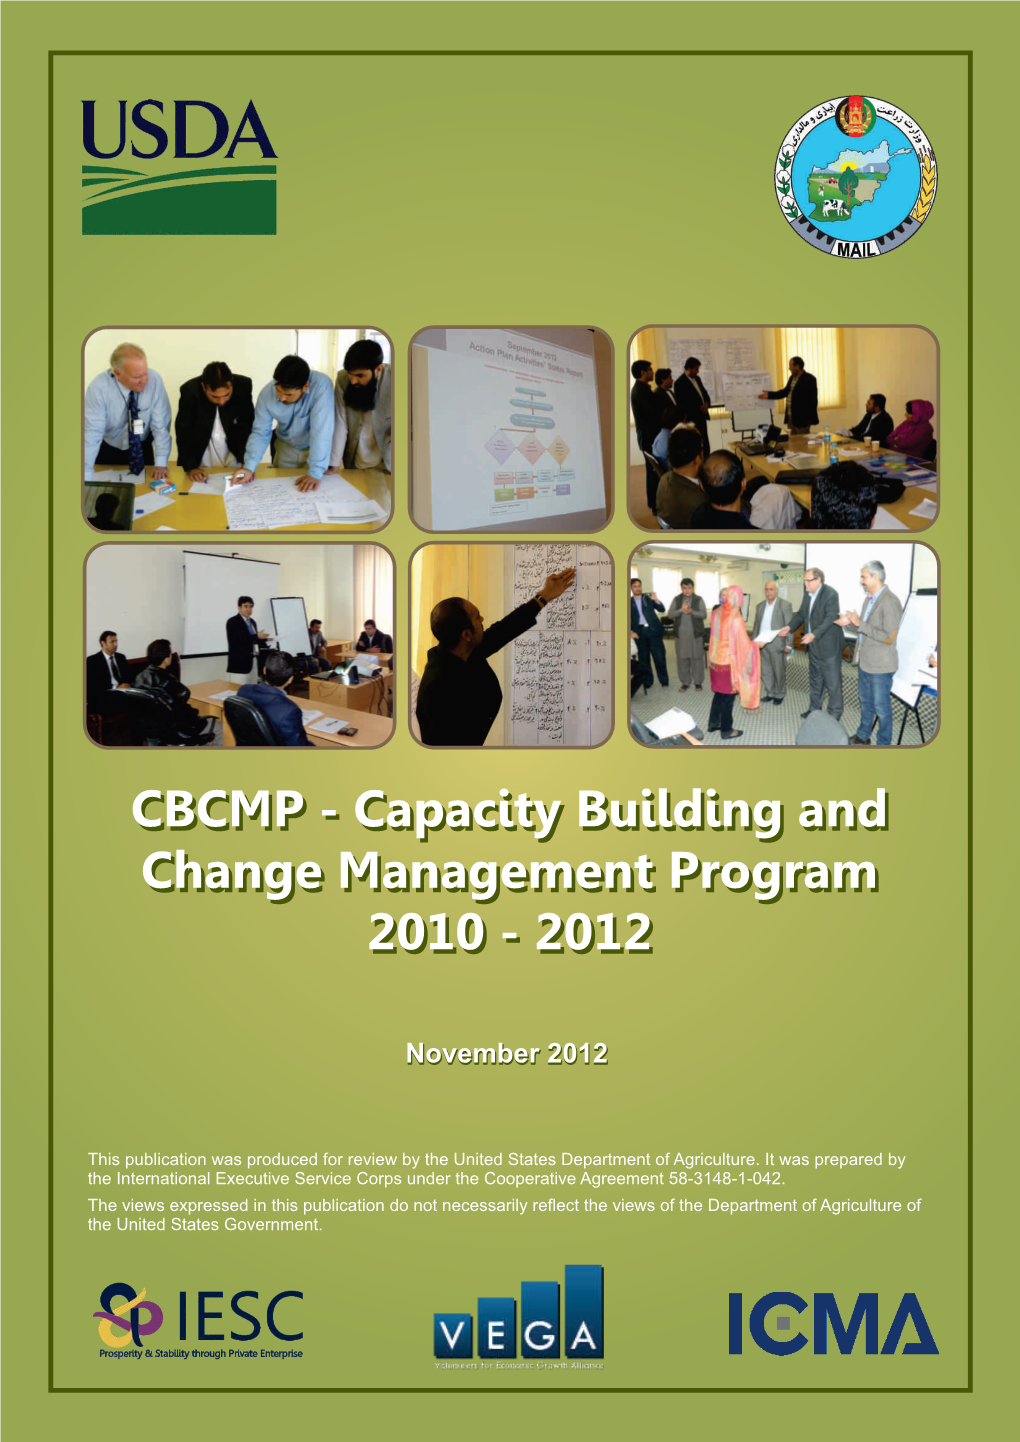 CBCMPCBCMP -- Capcapacityacity Buildingbuilding Andand Changechange Managementmanagement Prprogramogram 20102010 -- 20122012